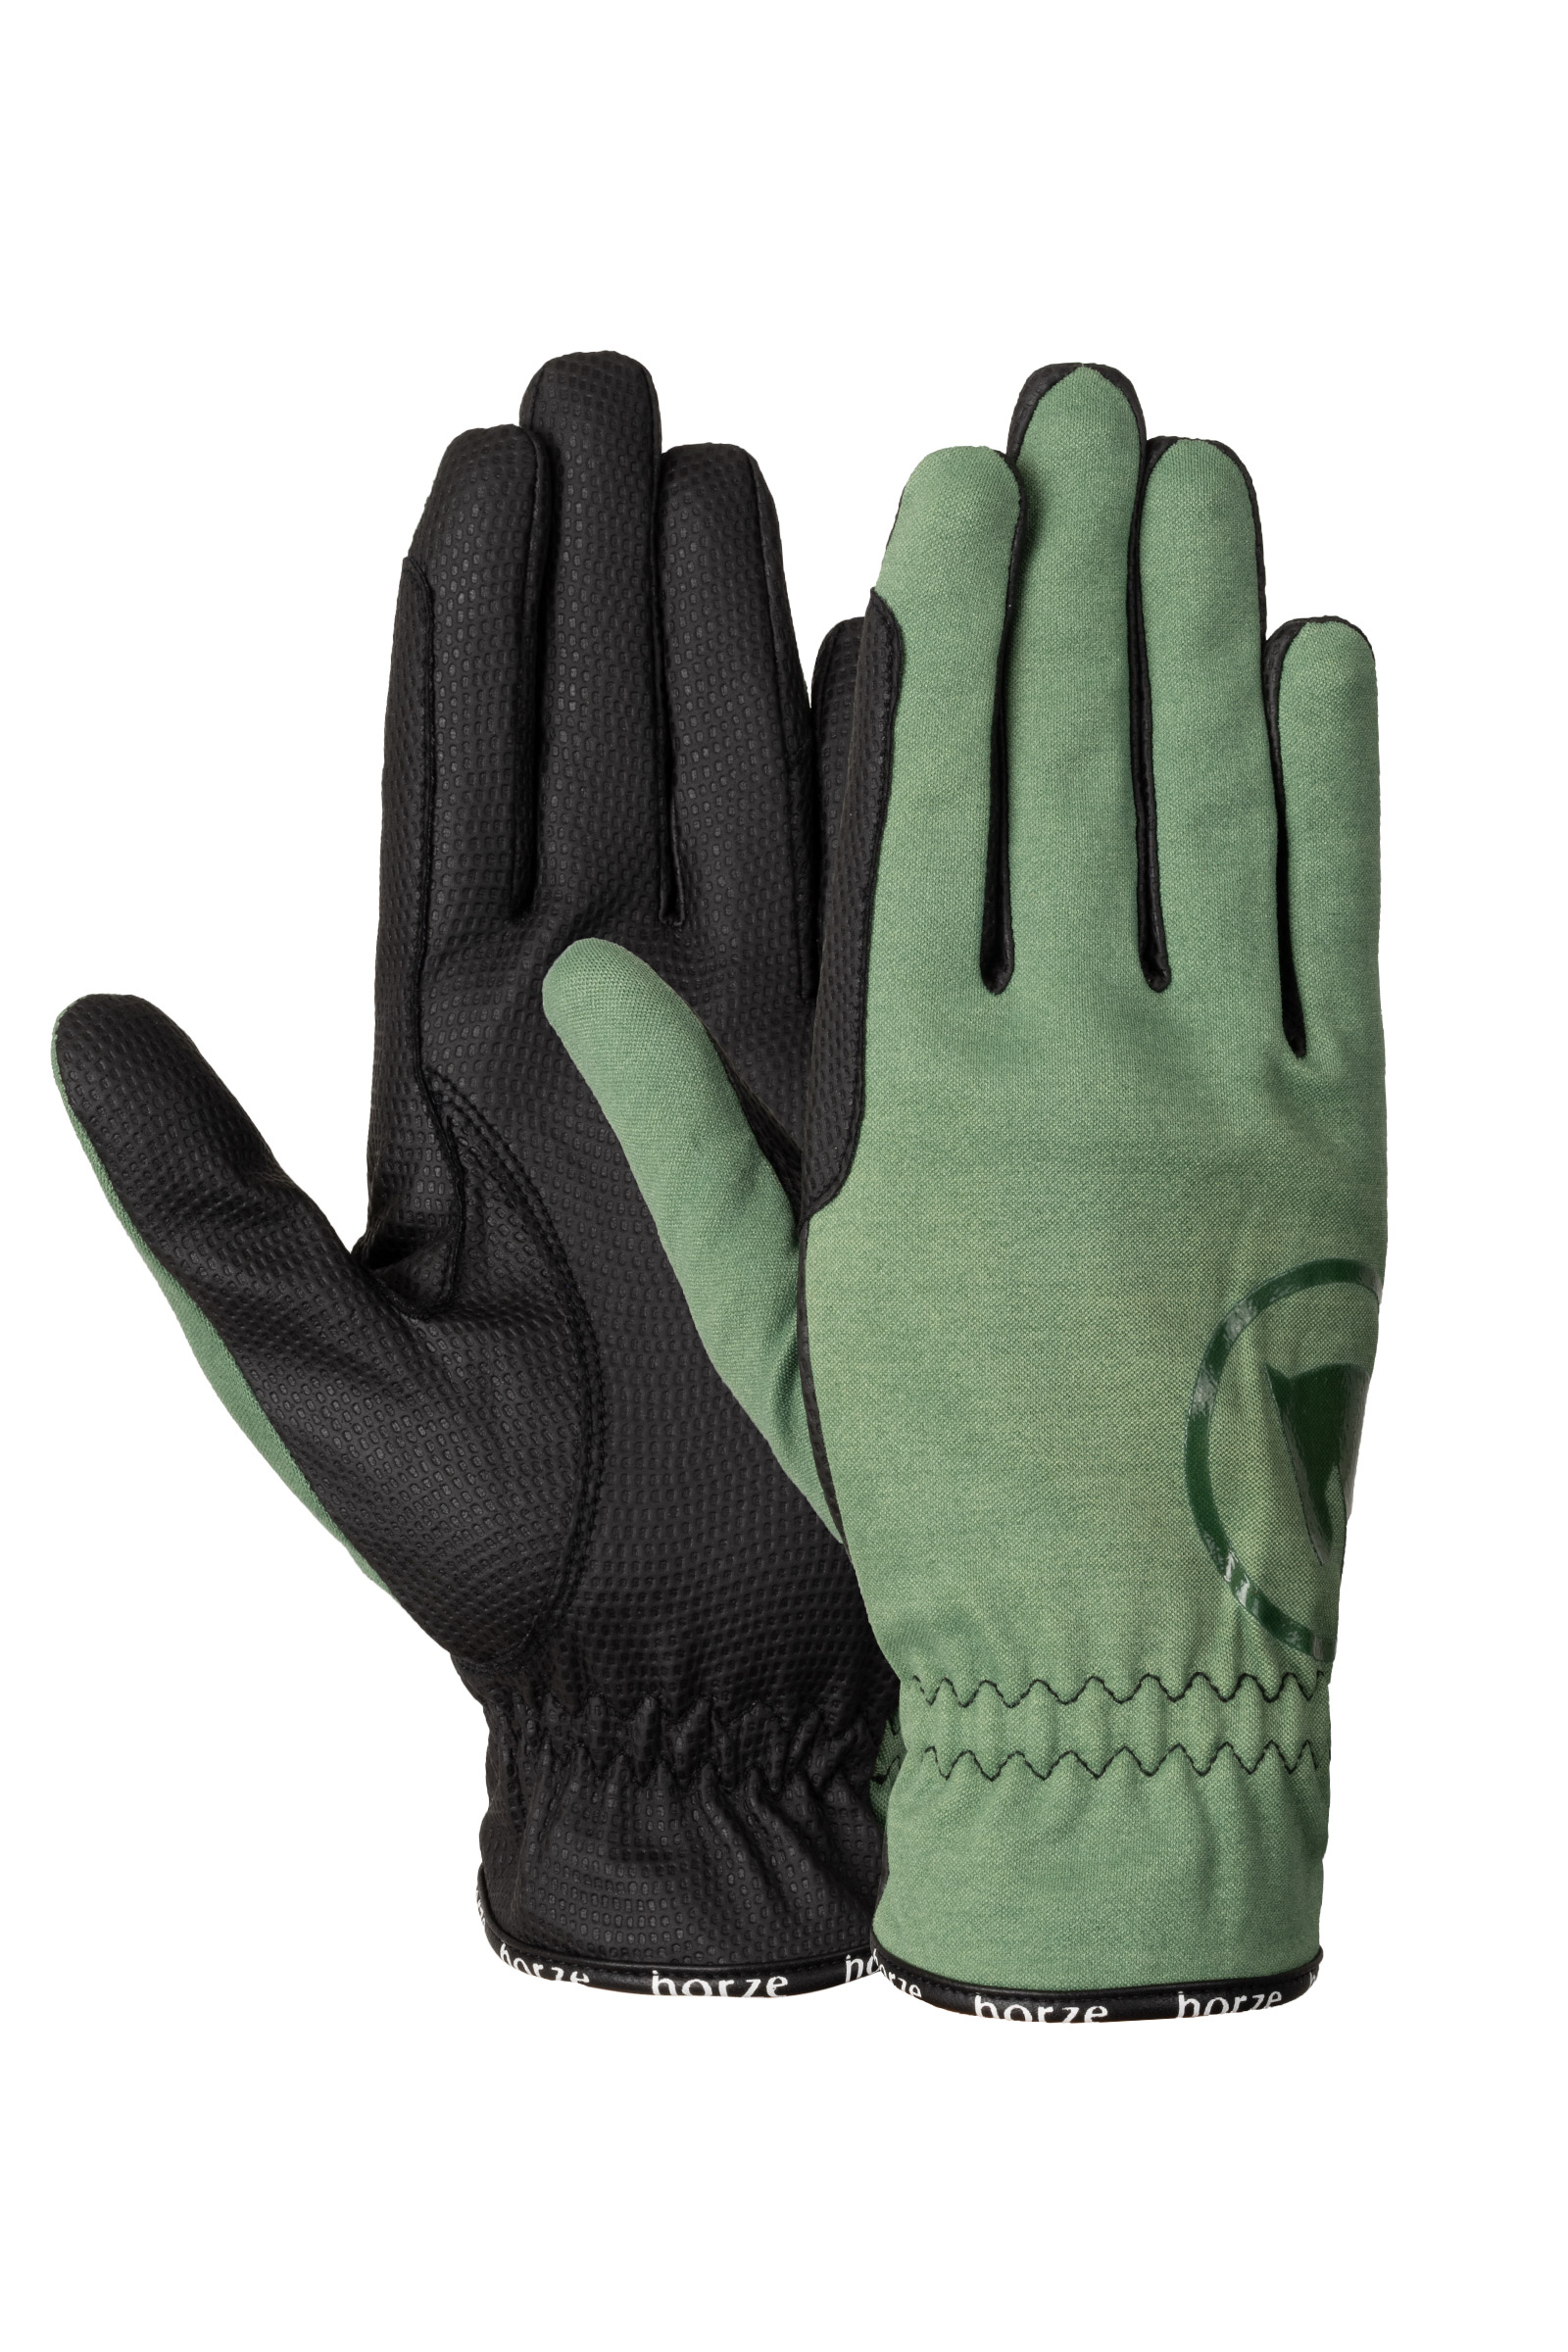 Buy Horze Nichelle Women's Riding Gloves